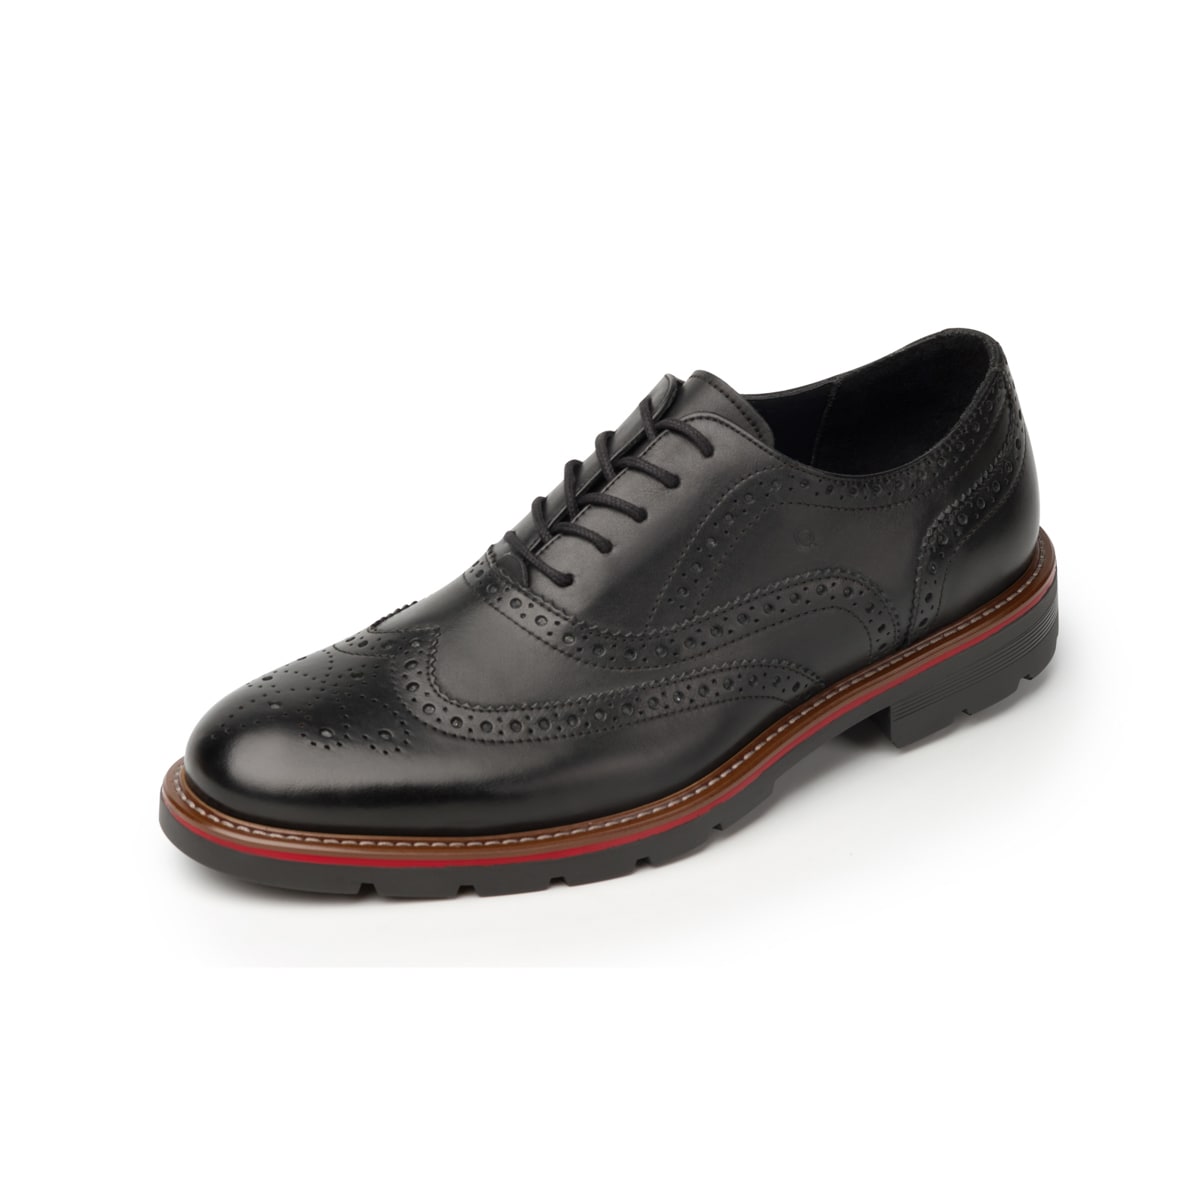 Zapato Oxford Bostoniano Quirelli Con Brillo Natural Para Hombre Estilo 88602 Negro | Flexi México Tienda Oficial en Línea